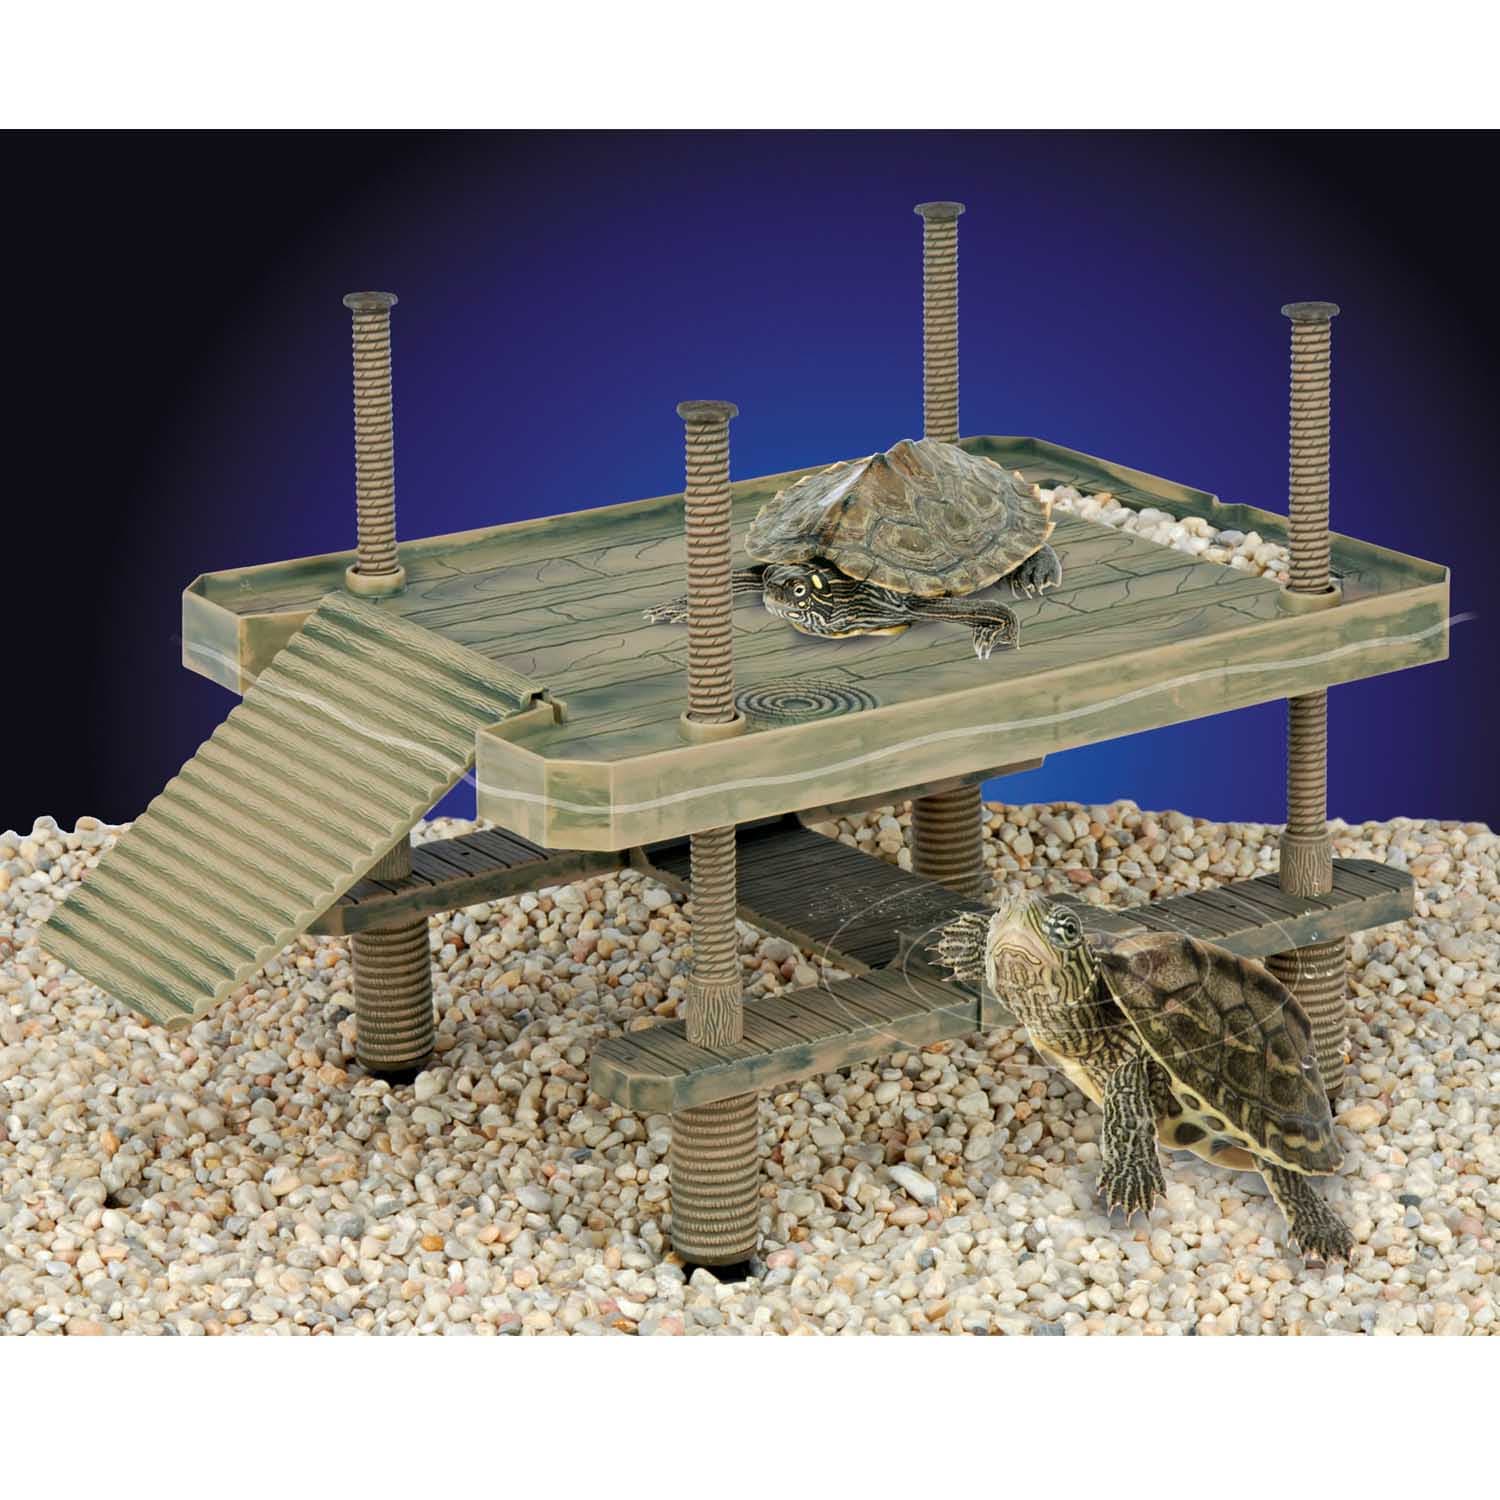 aquarium tank reptile turtle basking terrace floating island platform dock RS 